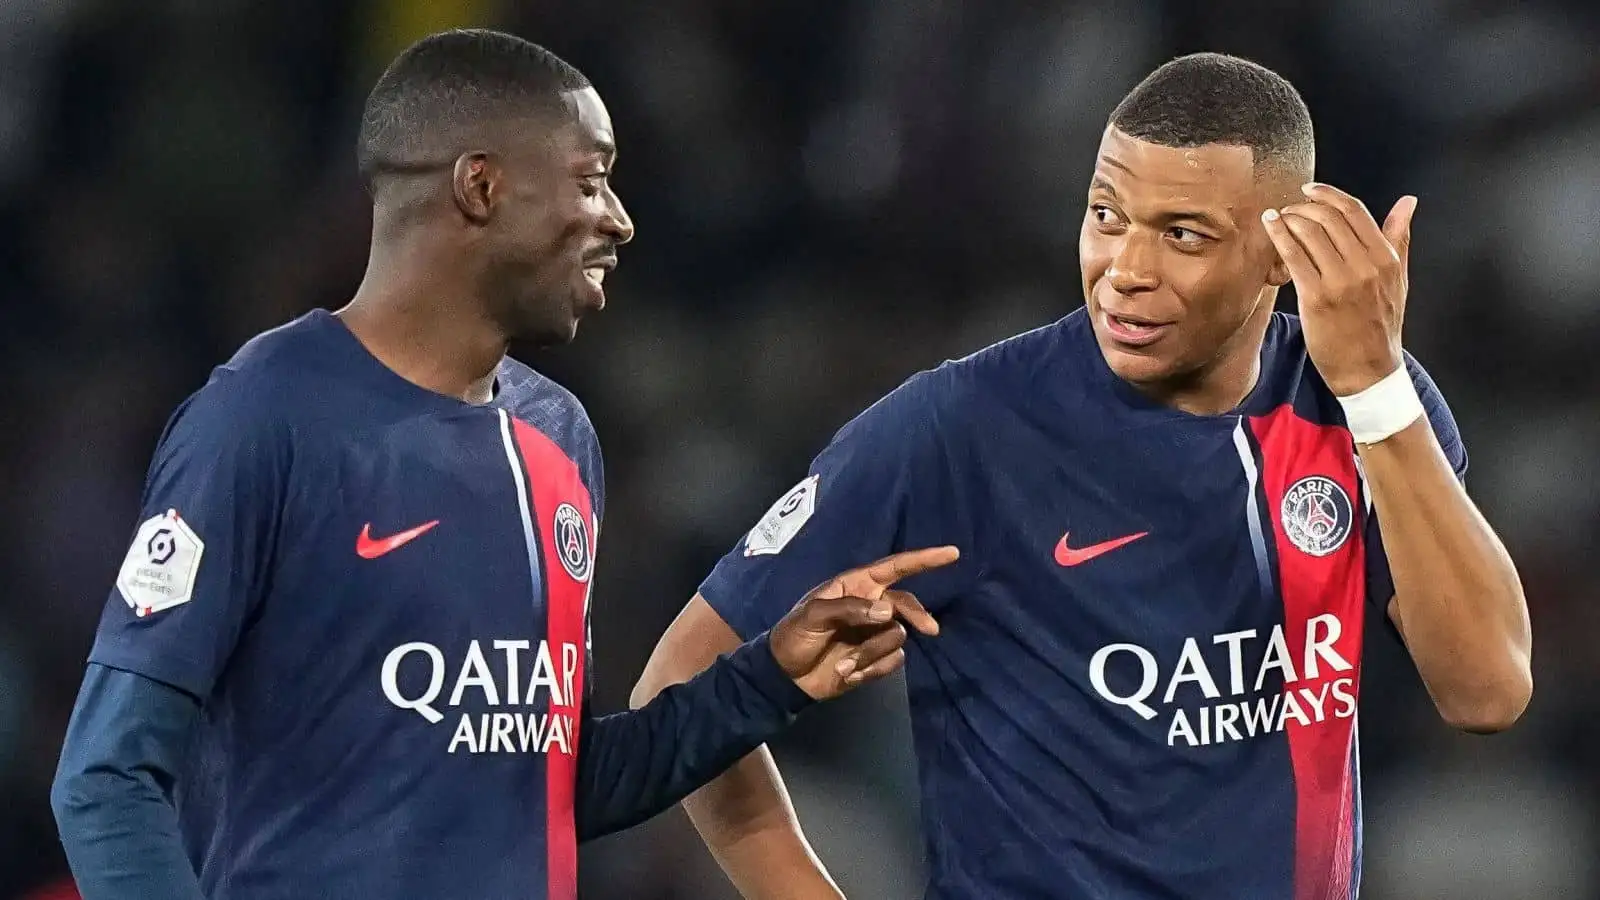 Dembele completes his move to Paris Saint-Germain